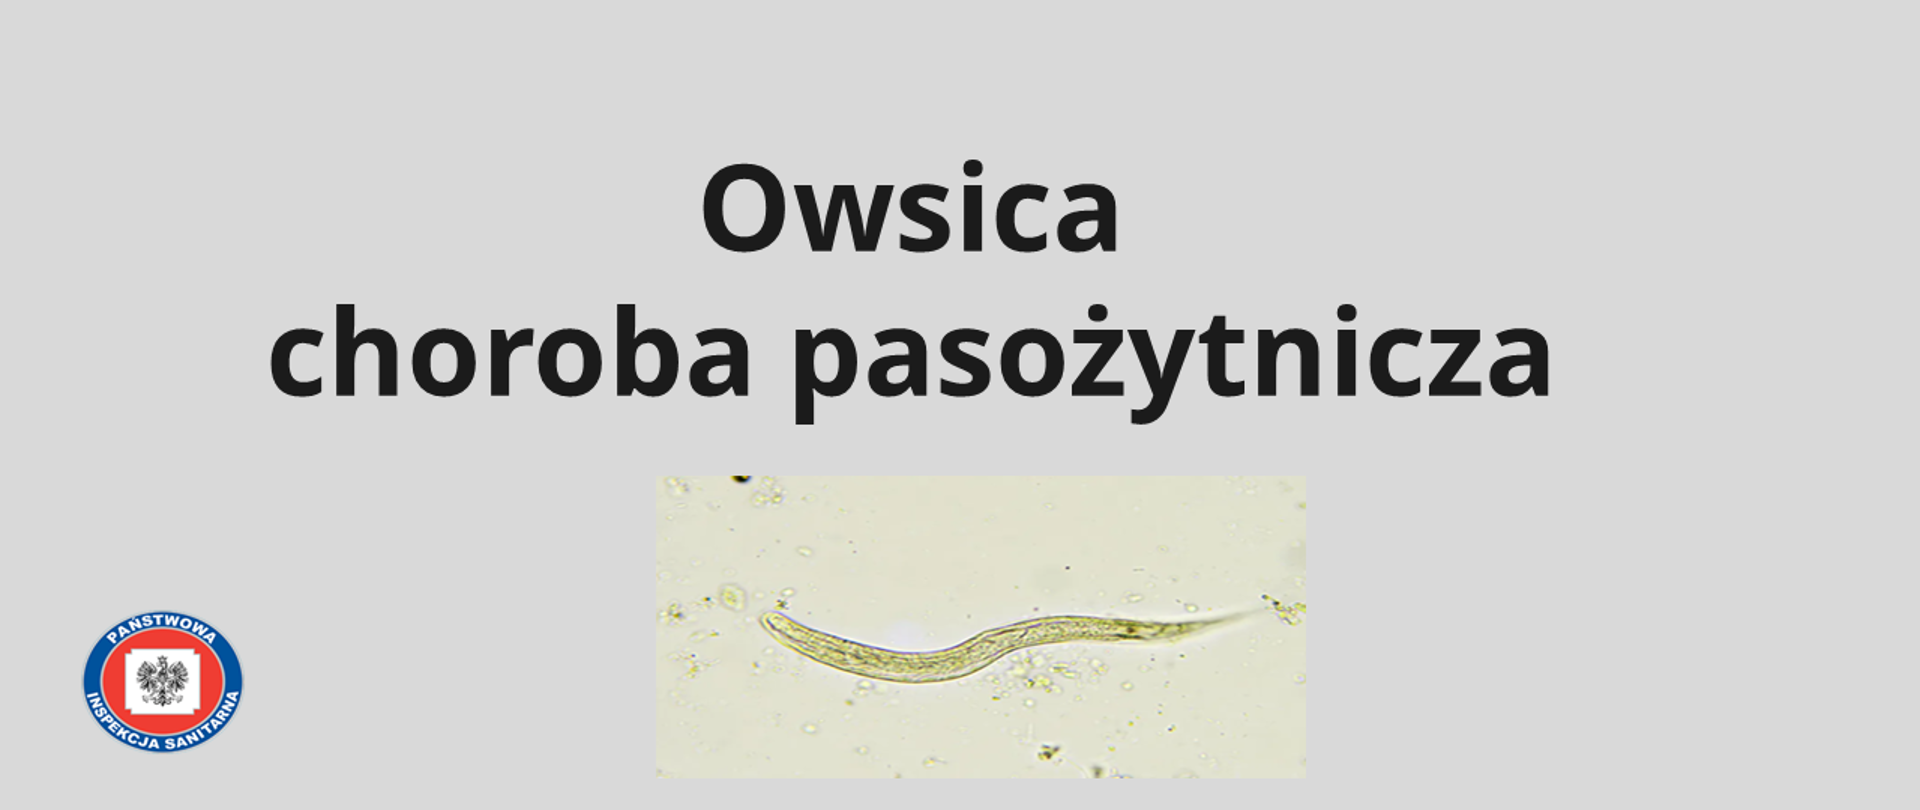 owsica